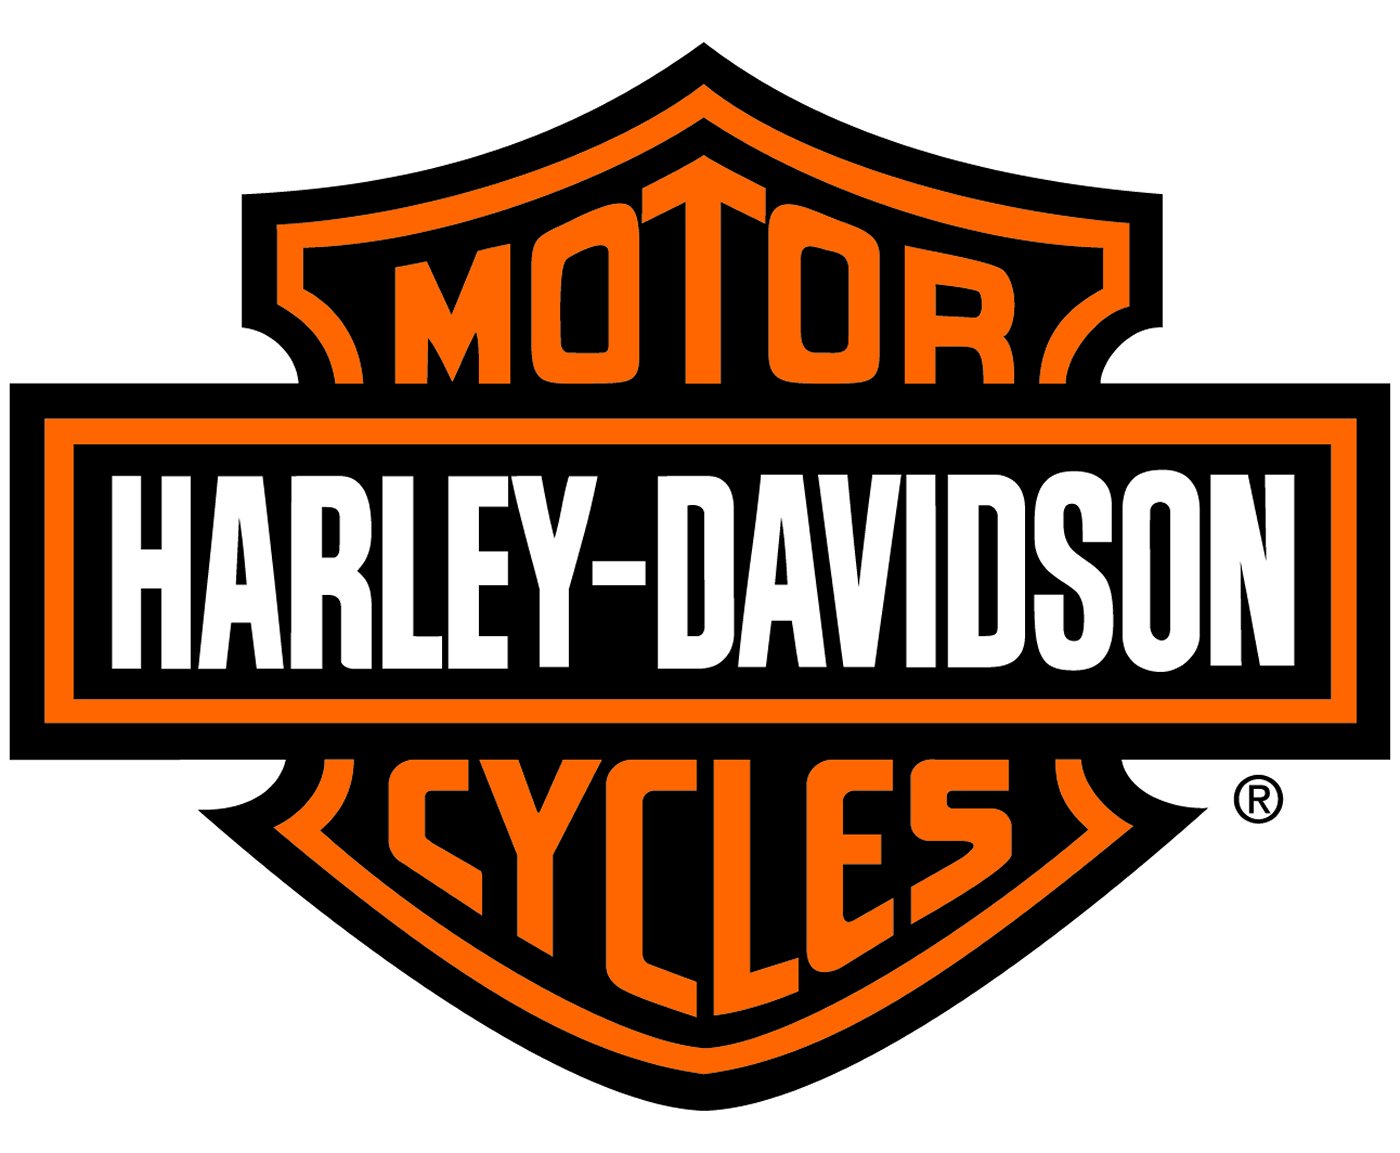 File:Harley davidson logo.jpg.